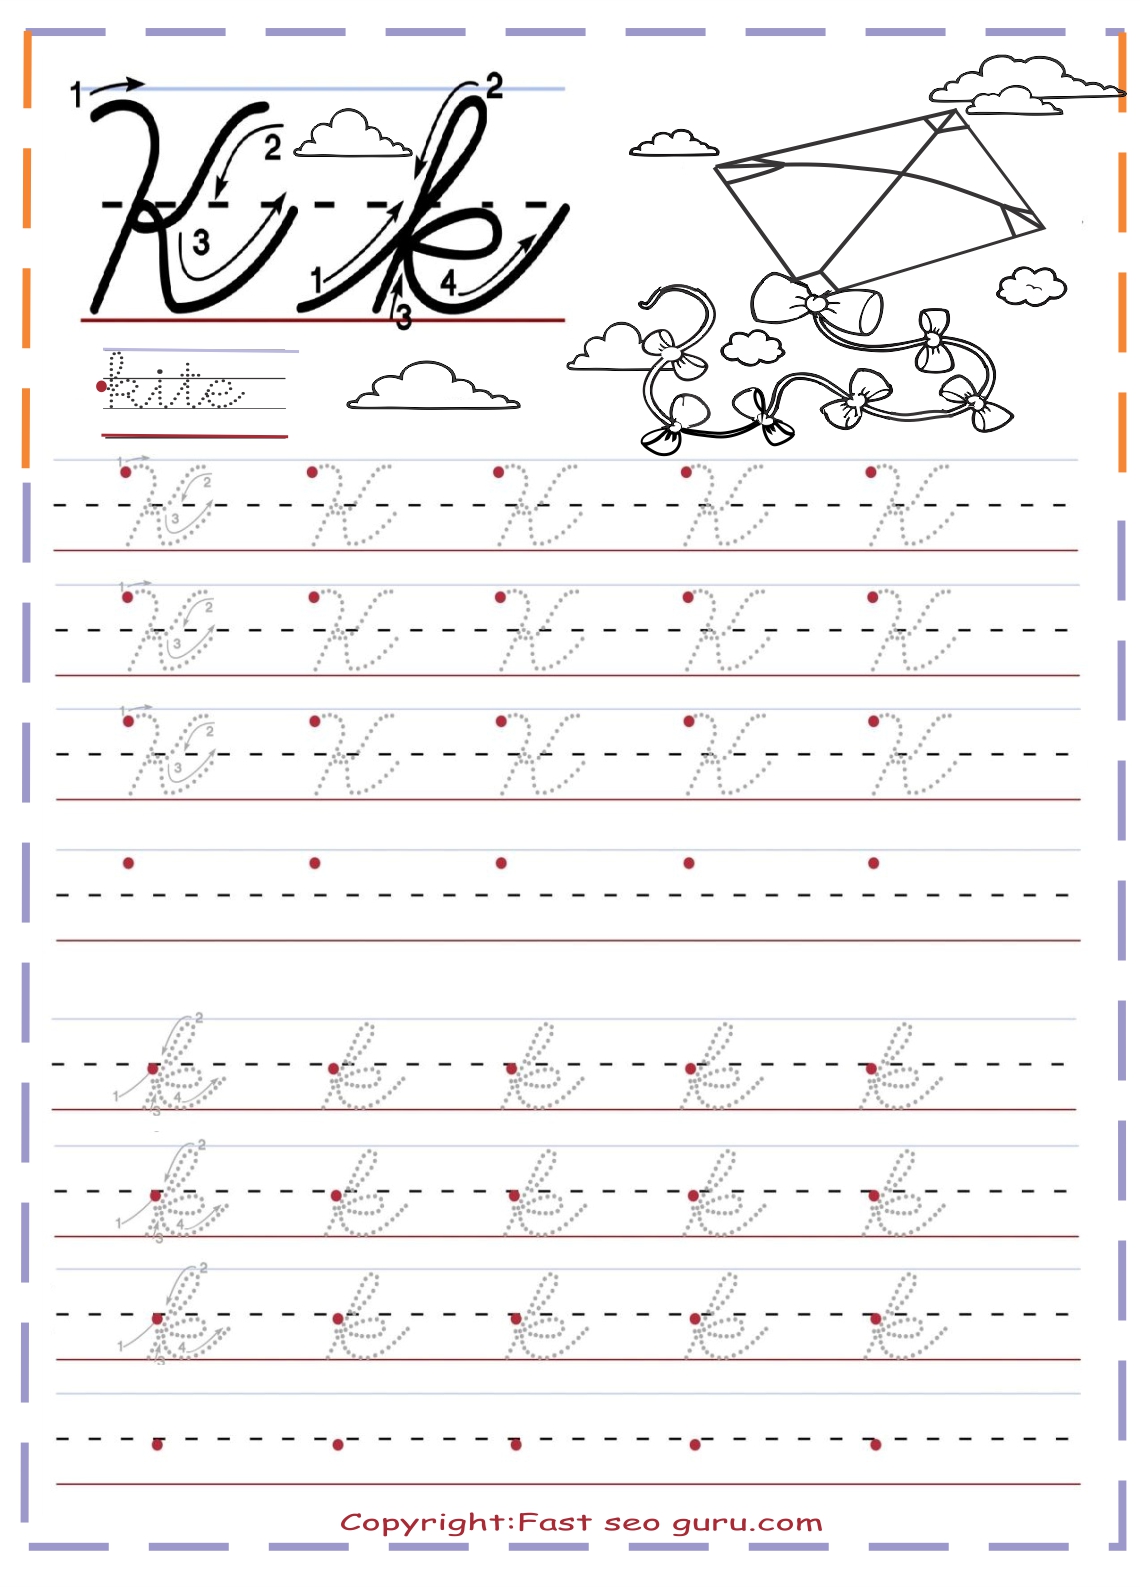 cursive handwriting tracing worksheets letter k for kite